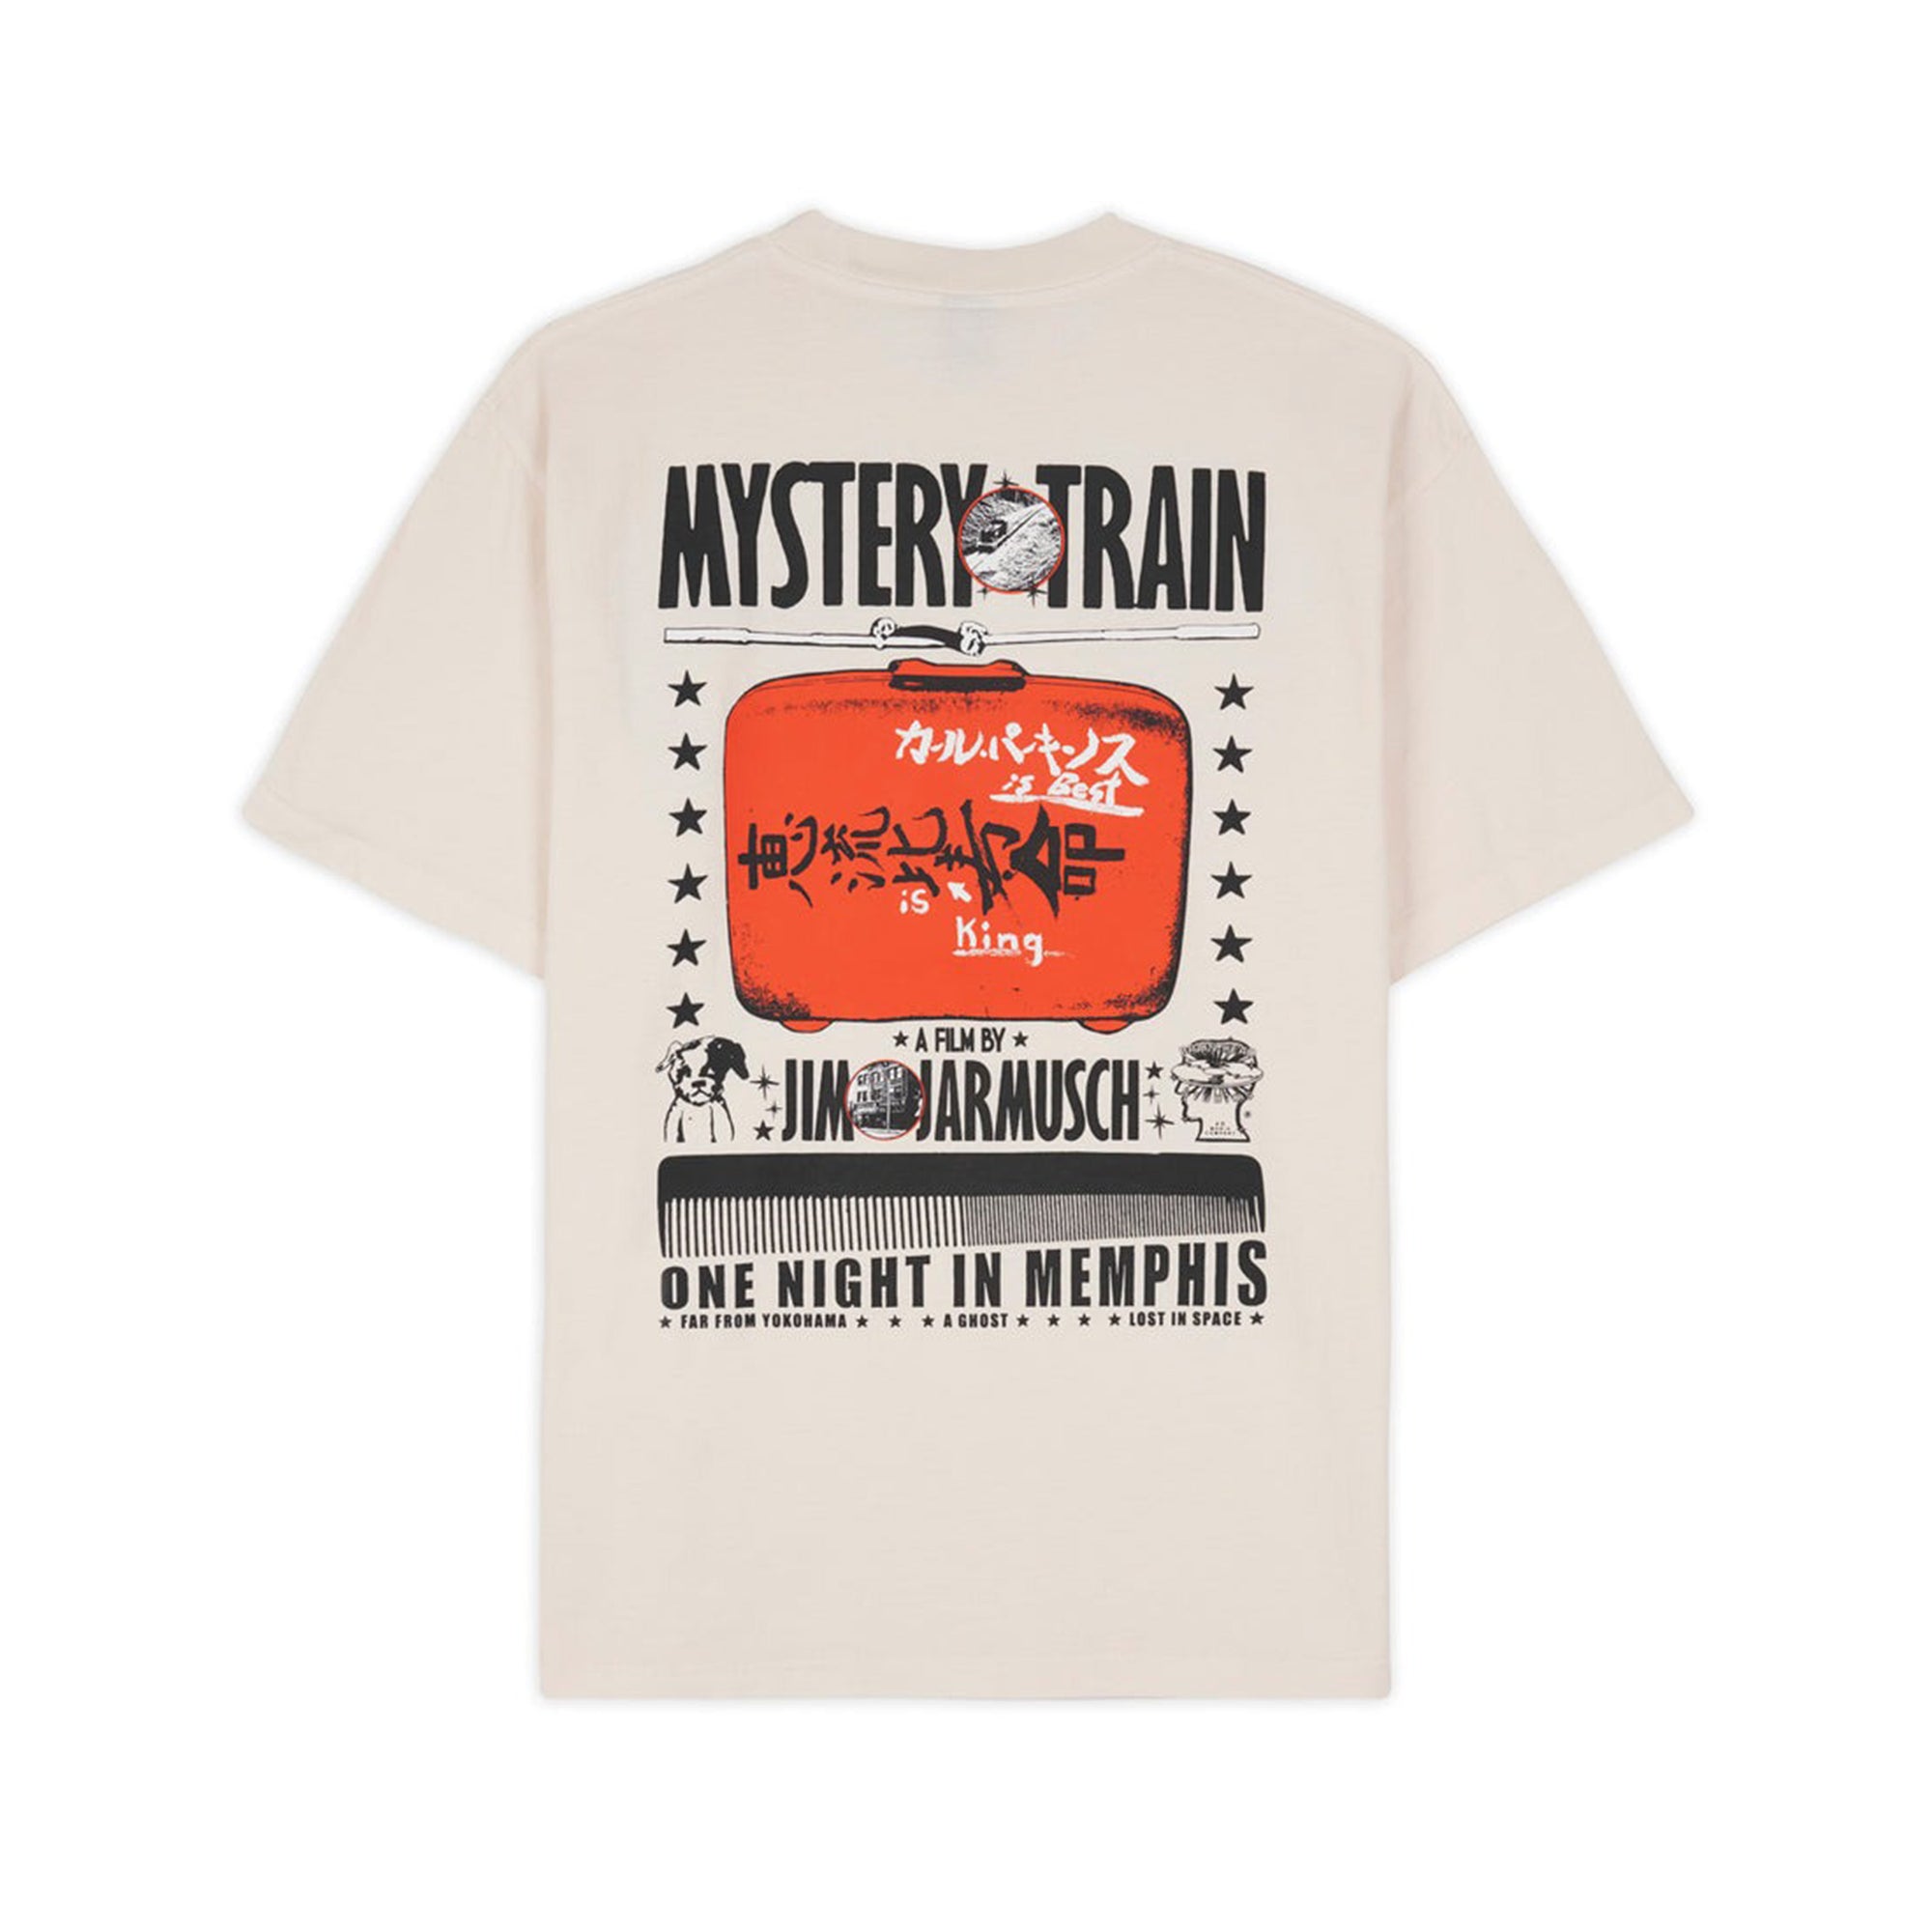 Brain Dead - Jim Jarmusch Men’s Mystery Train T-Shirt - (Natural) view 2